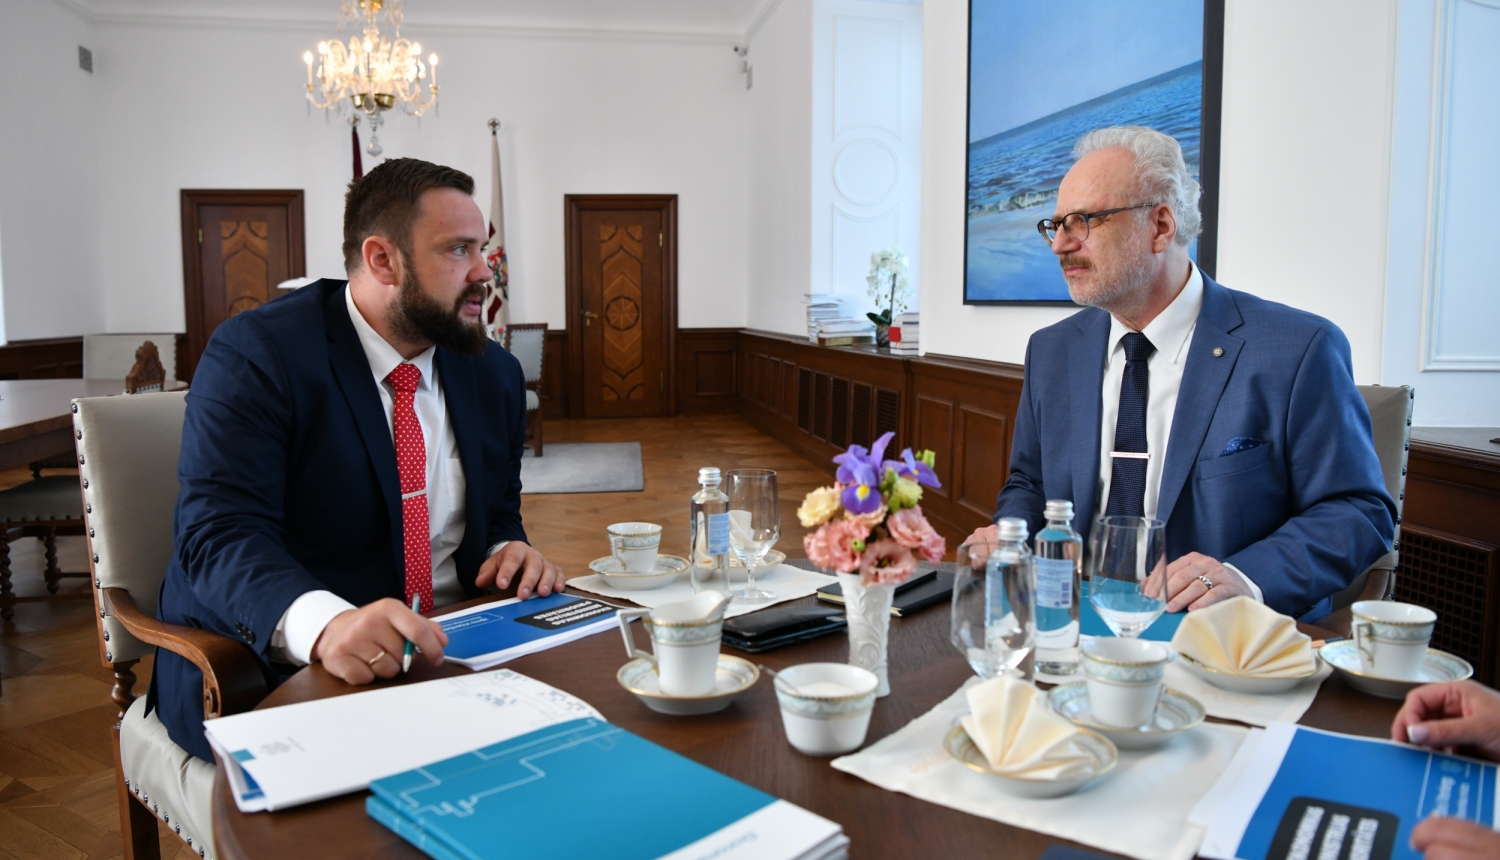 Valsts prezidents Egils Levits un ekonomikas ministrs Jānis Vitenbergs diskutē pie galda